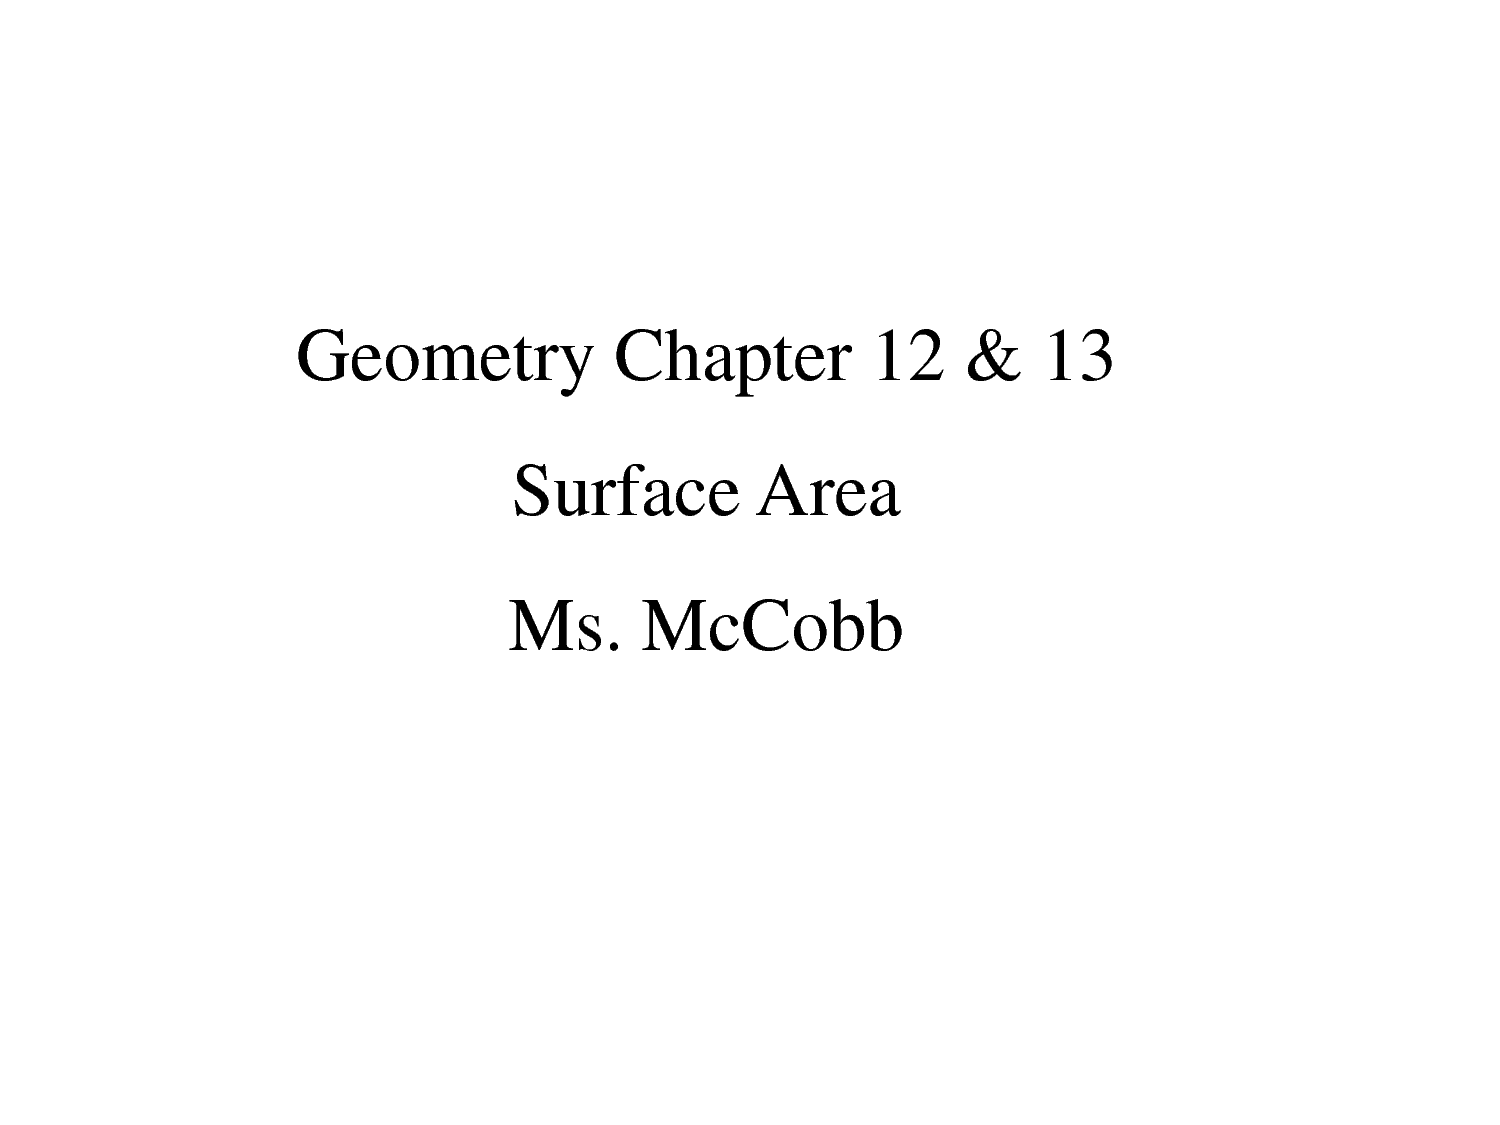 Geometric Shapes Worksheets 3rd Grade